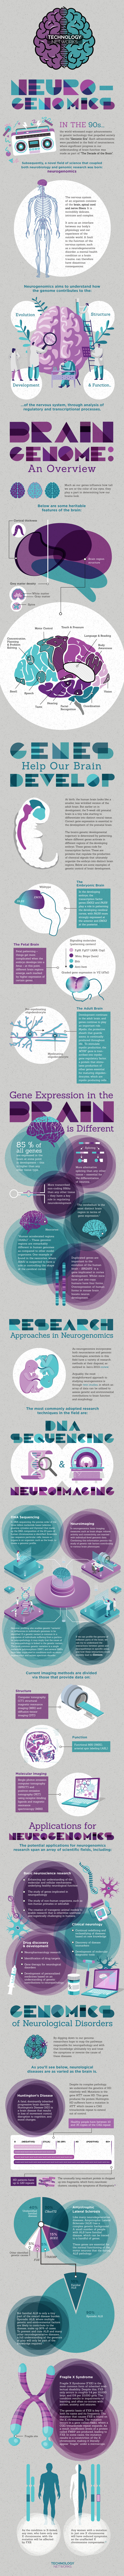 Neurogenomics-V6 (1)-page-0